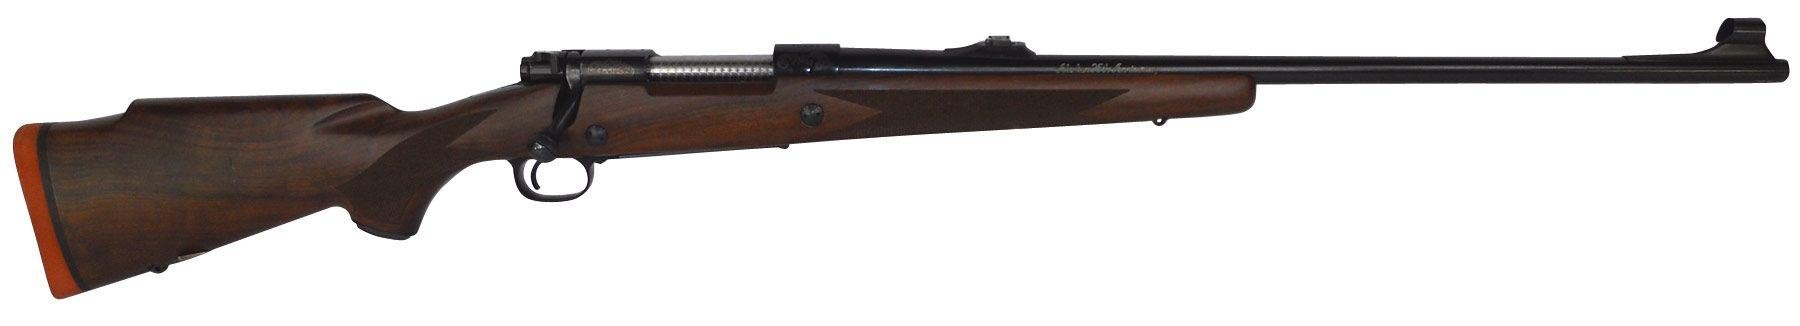 Winchester M .70 Alaskan